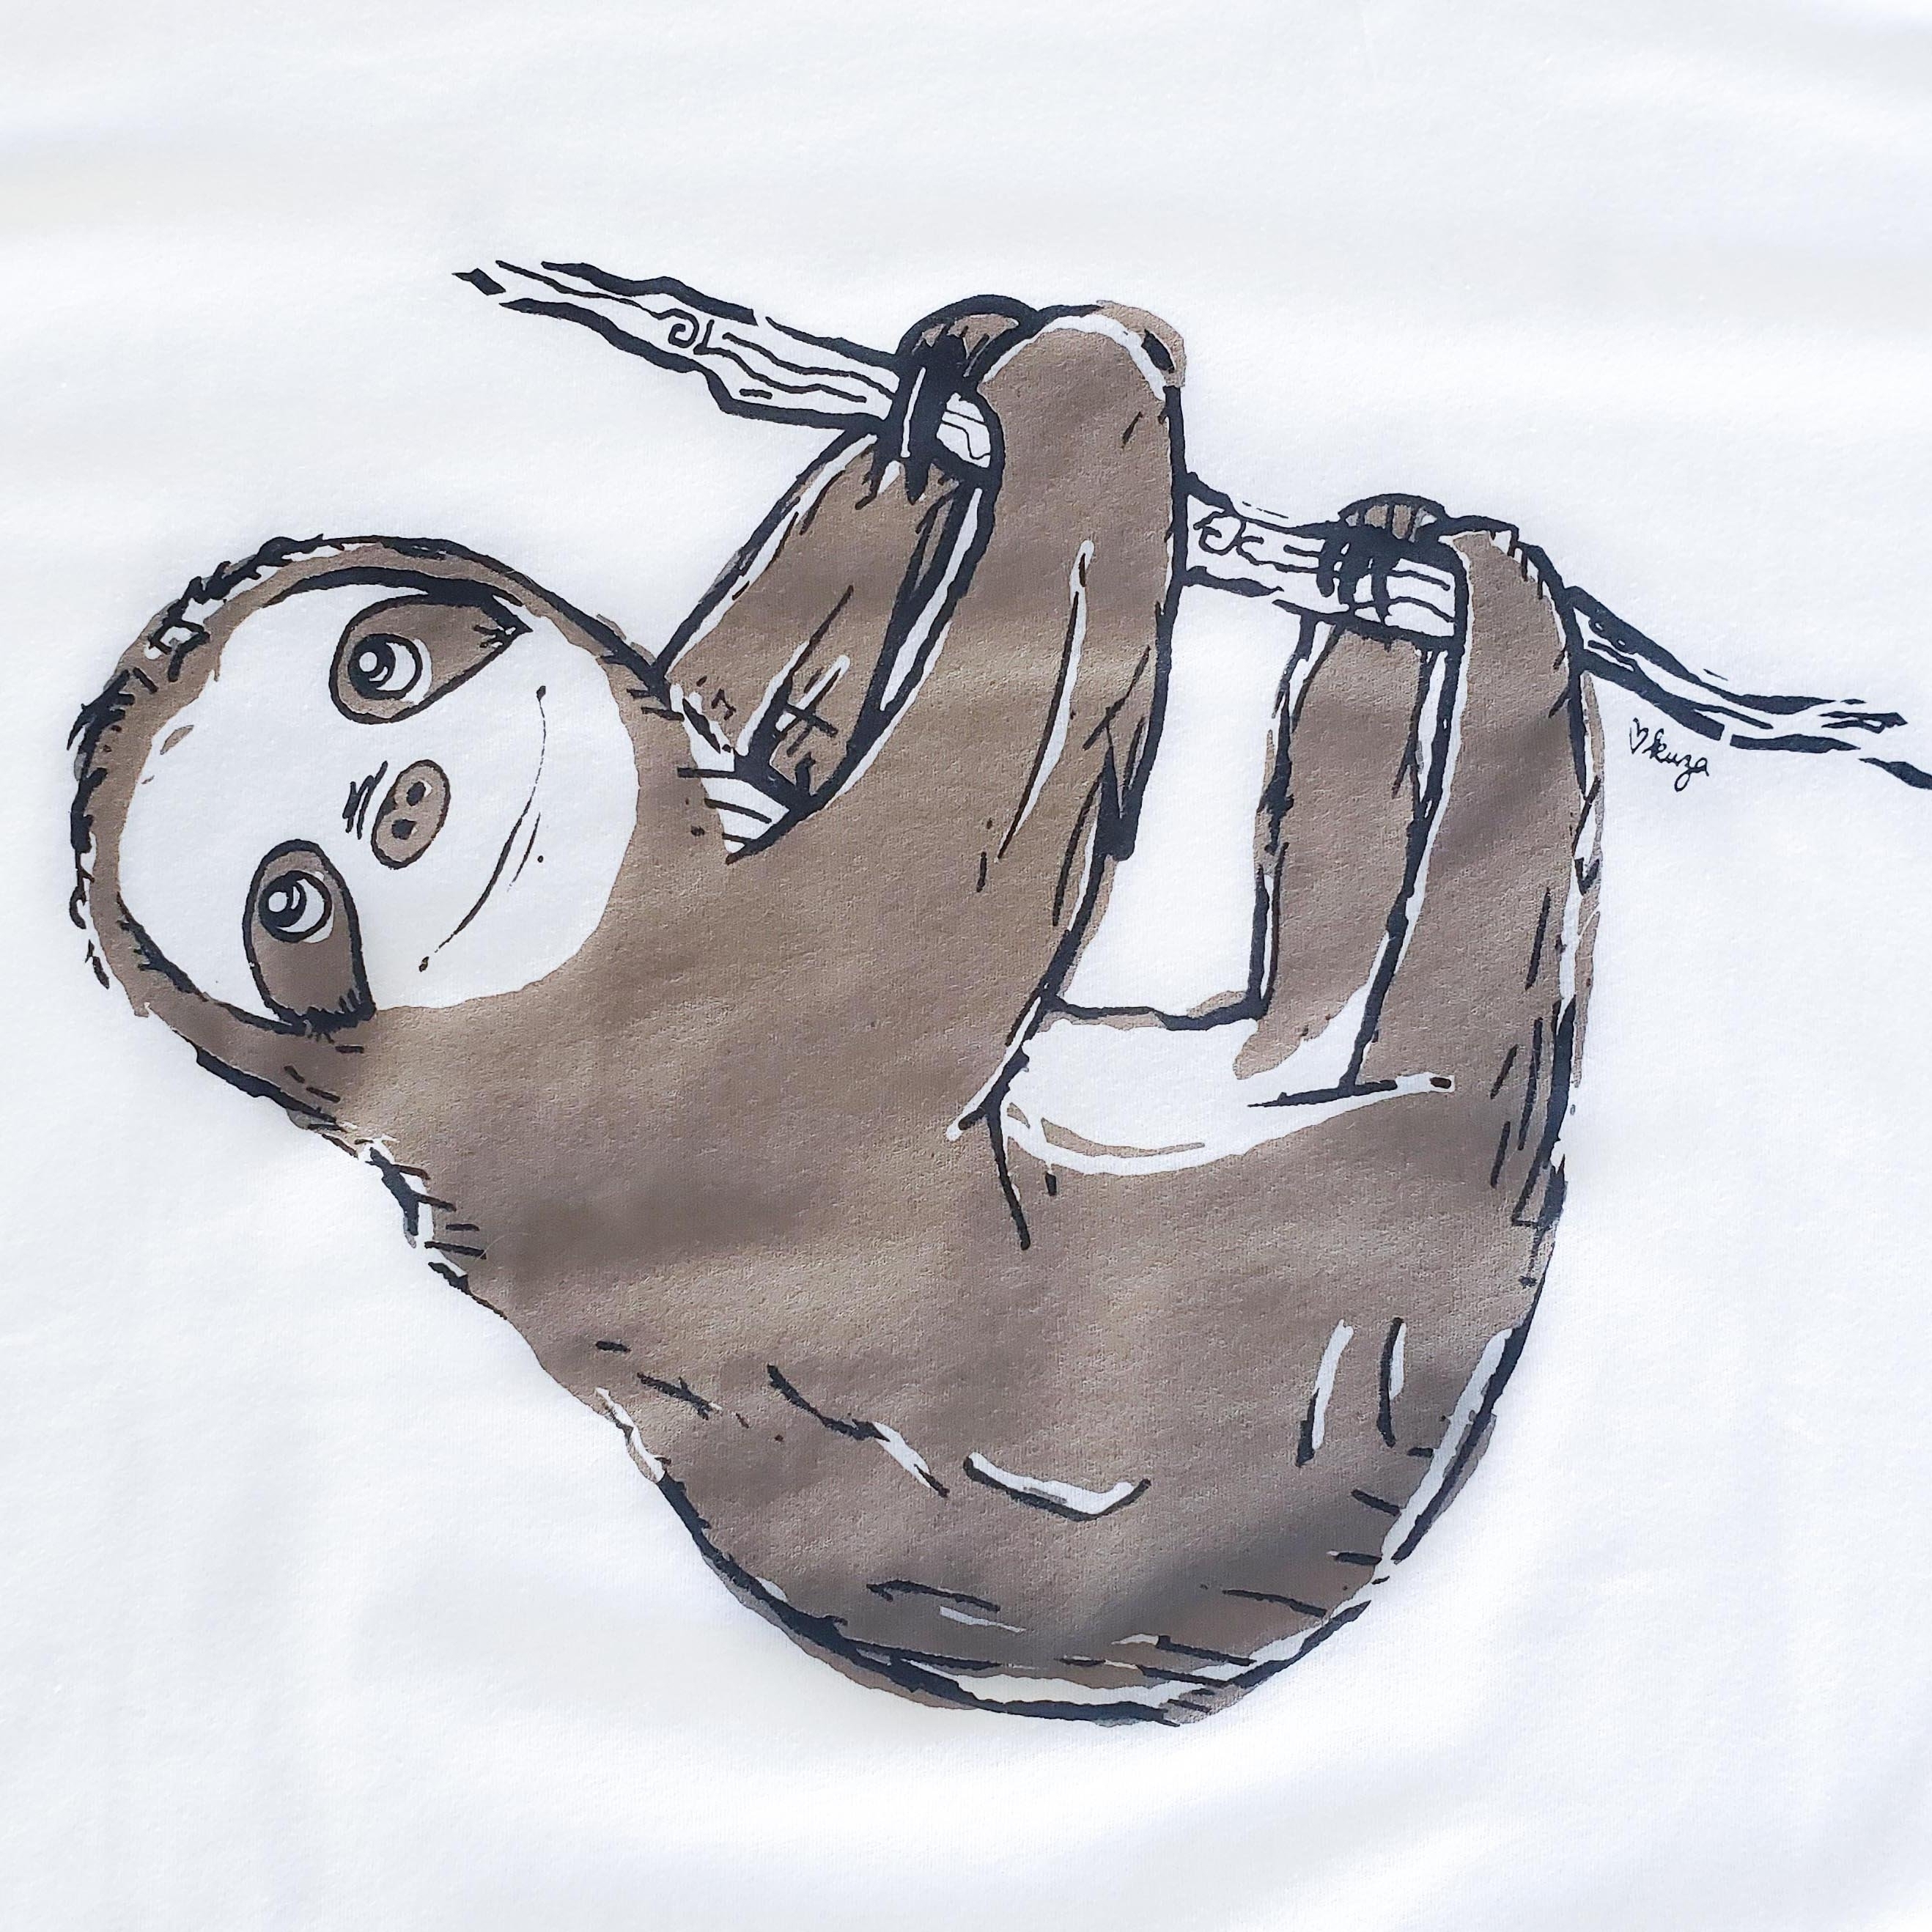 Zoology Fam Tee - Sloth, Small (2-8)